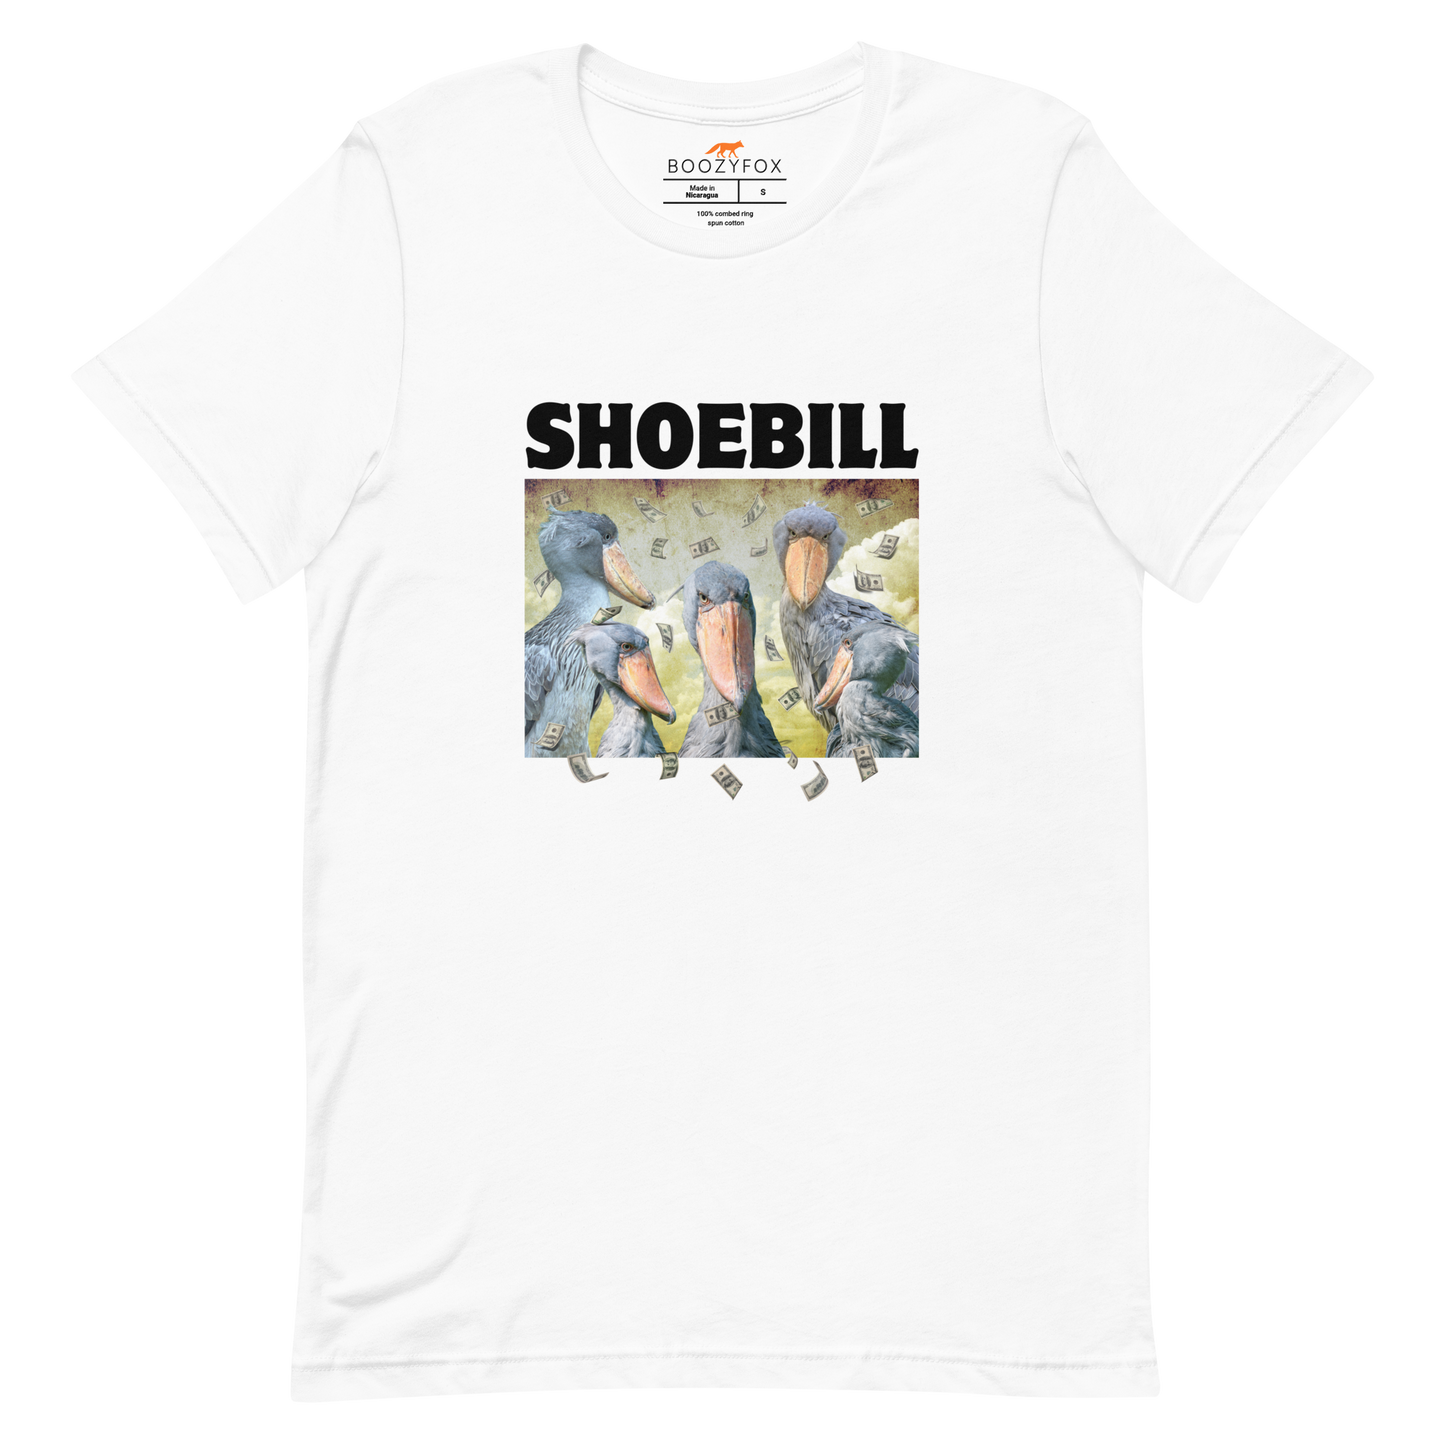 White Premium Shoebill Tee featuring cool Shoebill graphic on the chest - Artsy/Funny Graphic Shoebill Stork Tees - Boozy Fox